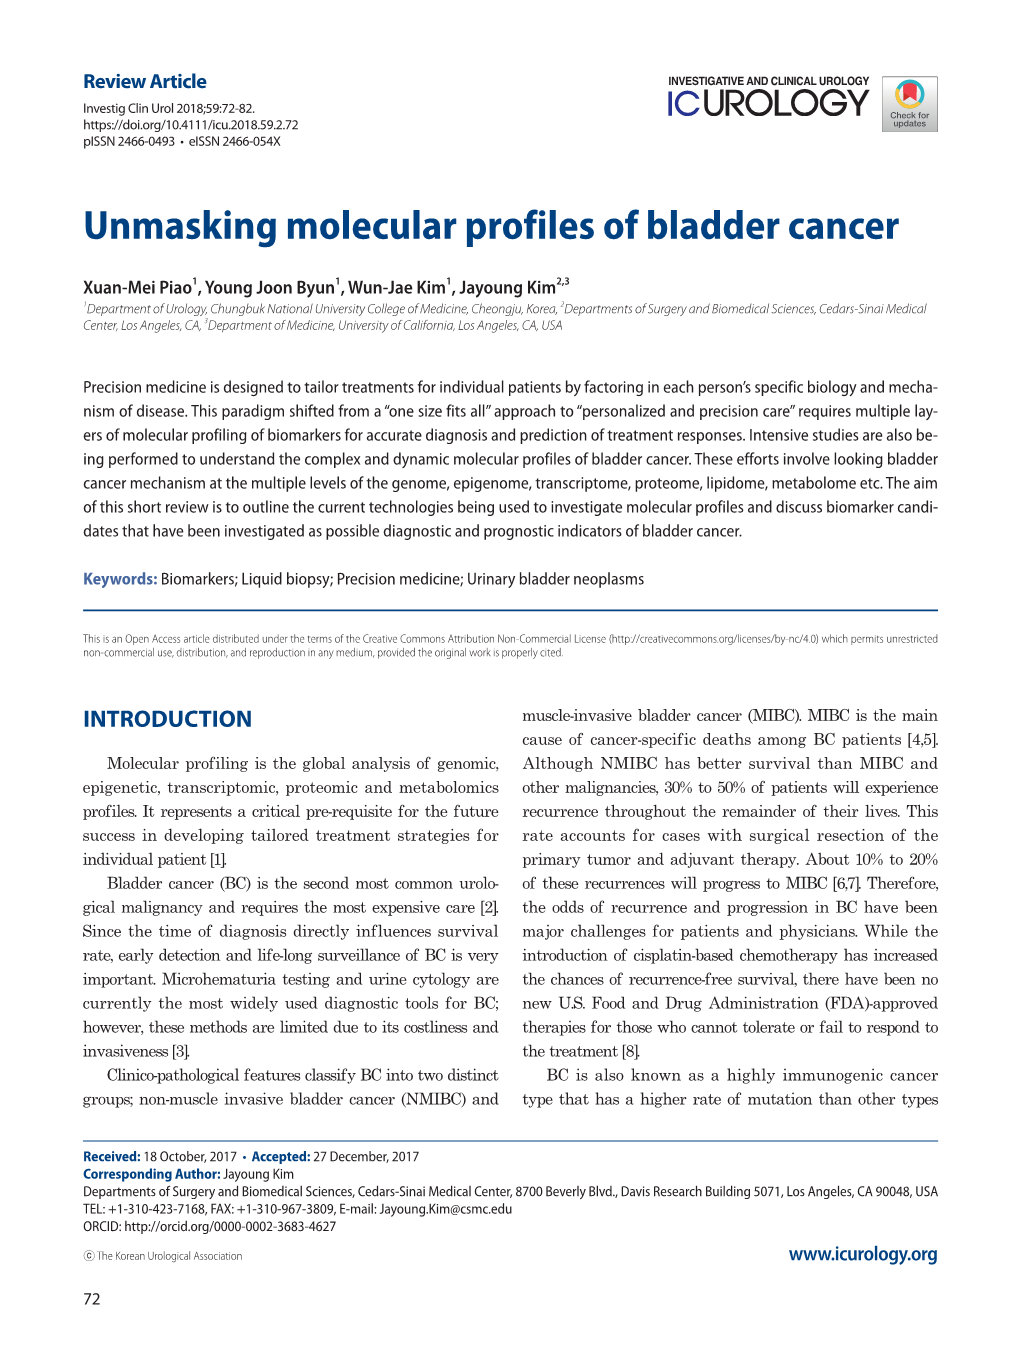 Unmasking Molecular Profiles of Bladder Cancer